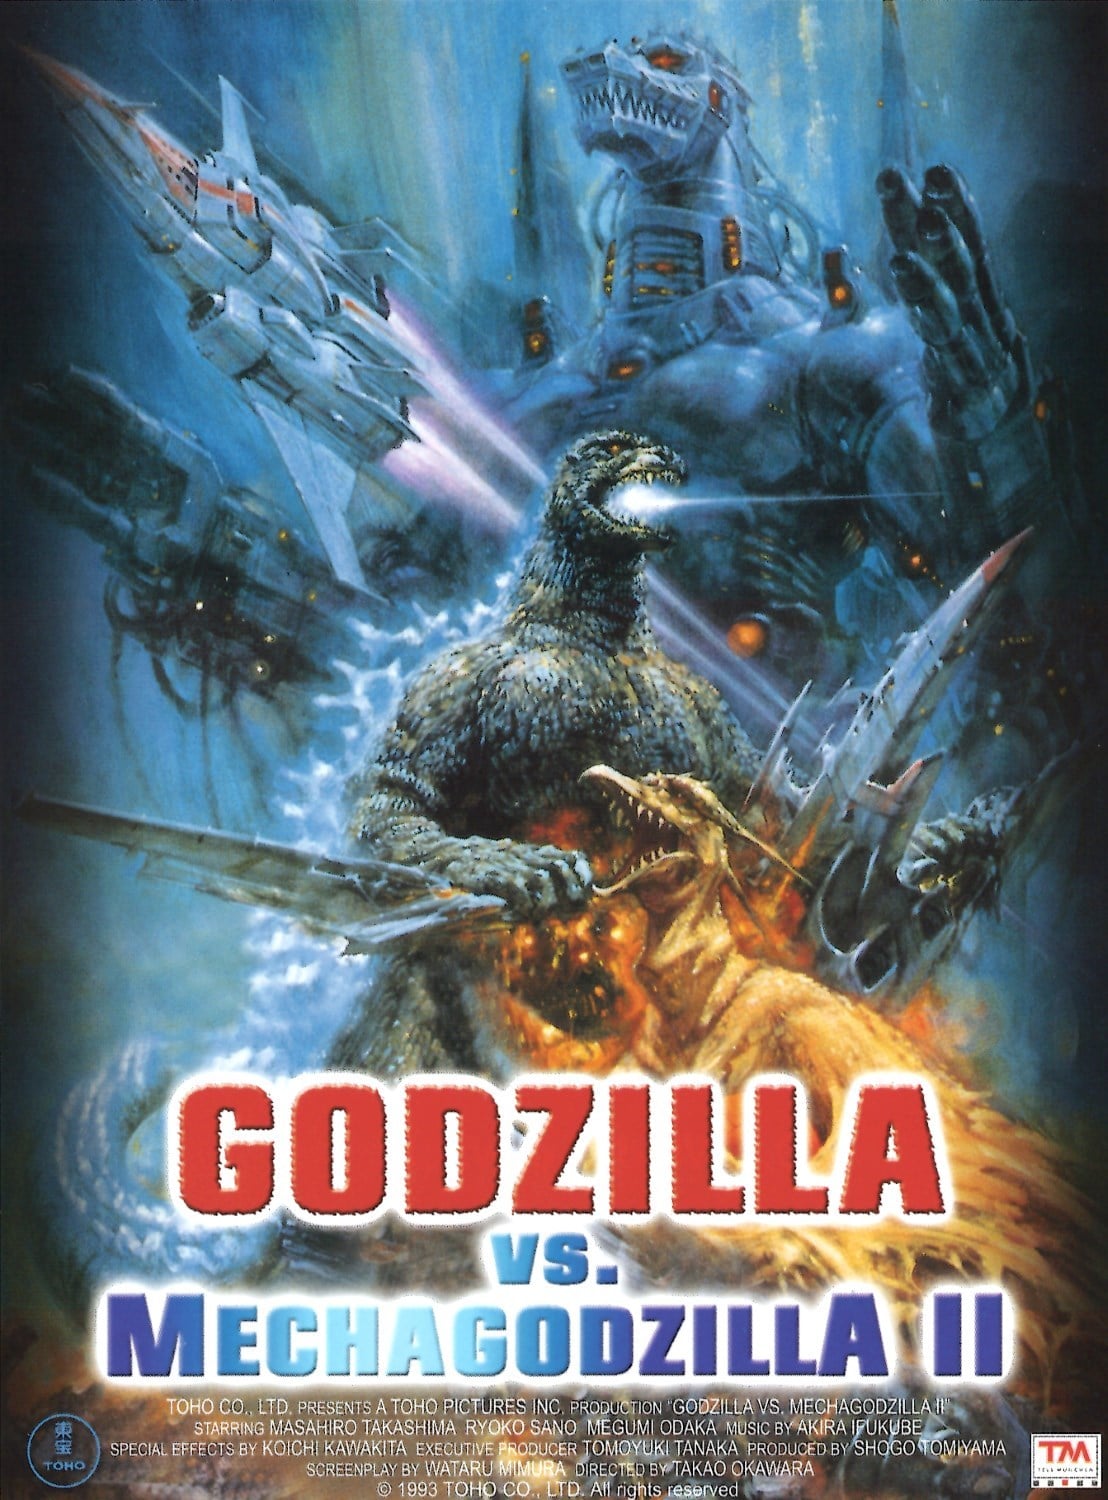 Plakat von "Godzilla vs. Mechagodzilla II"